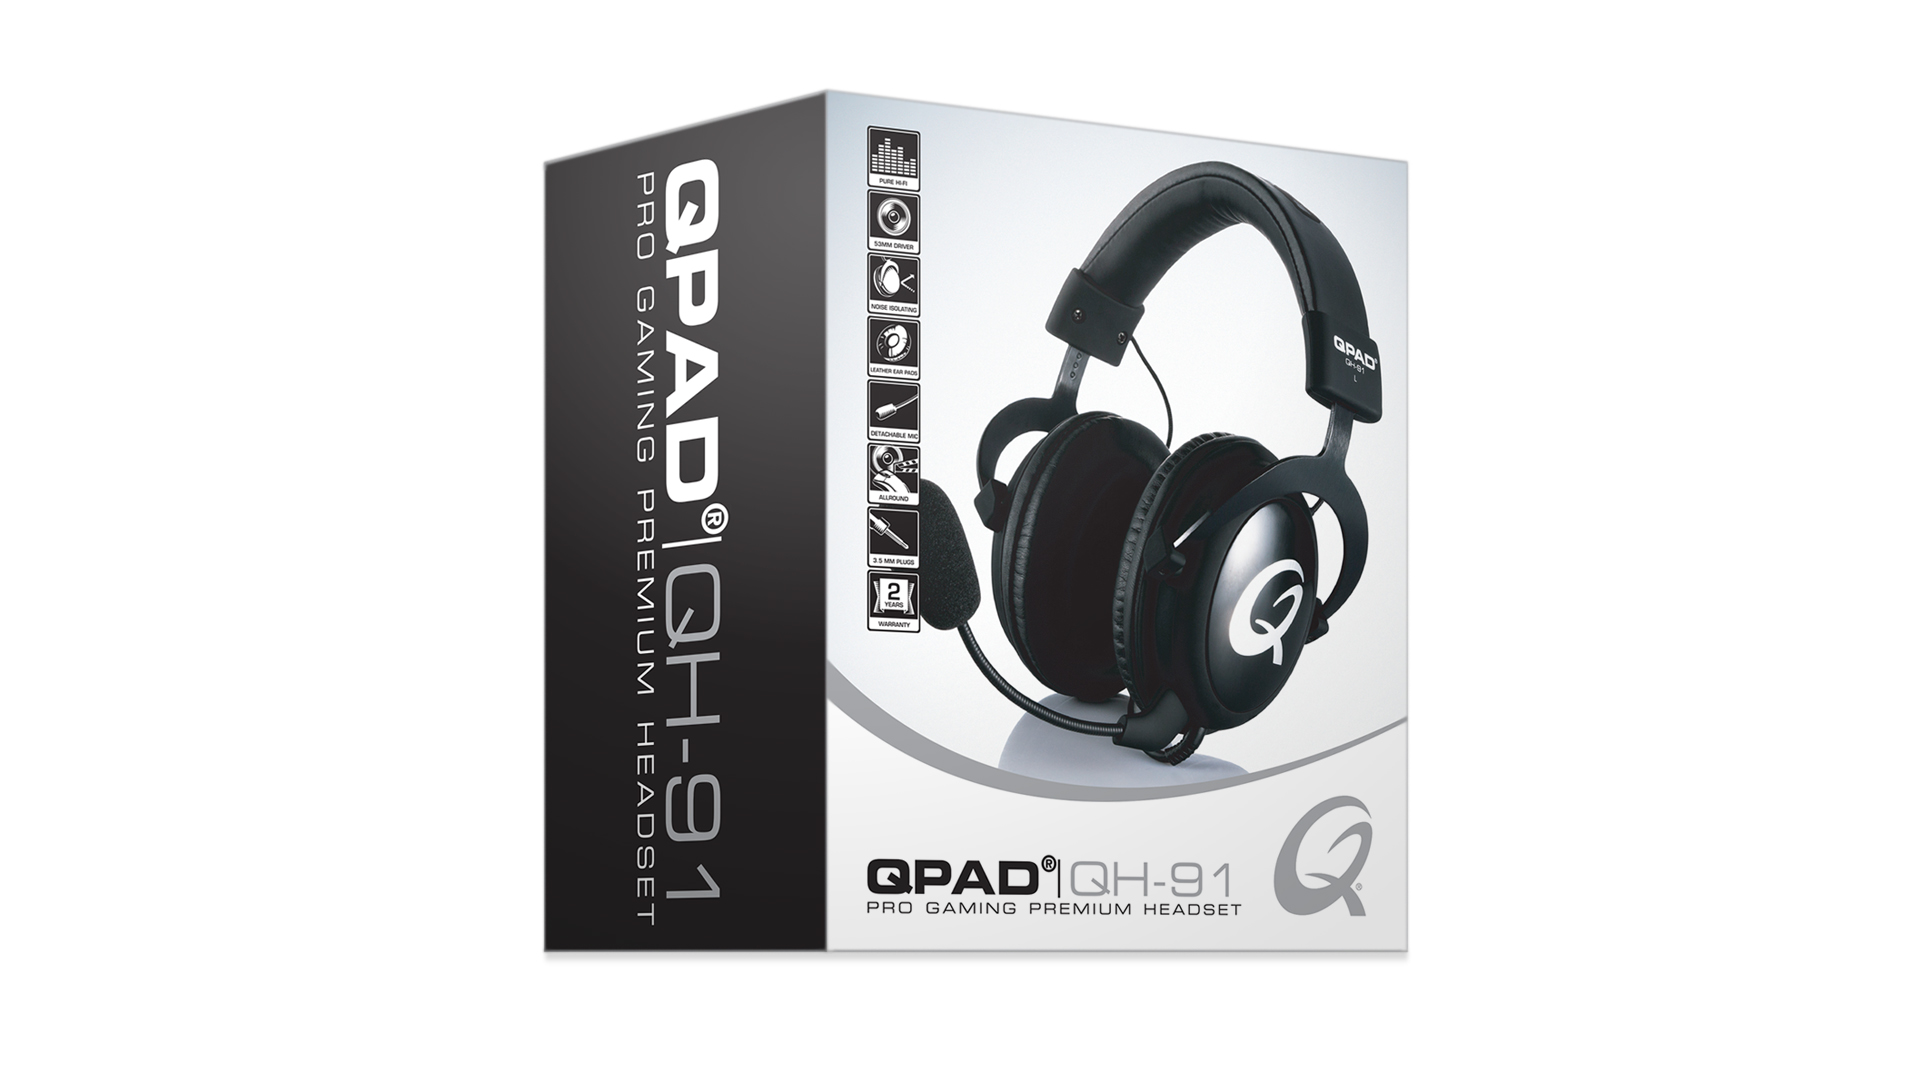 Qpad Pro Gaming Premium Headset